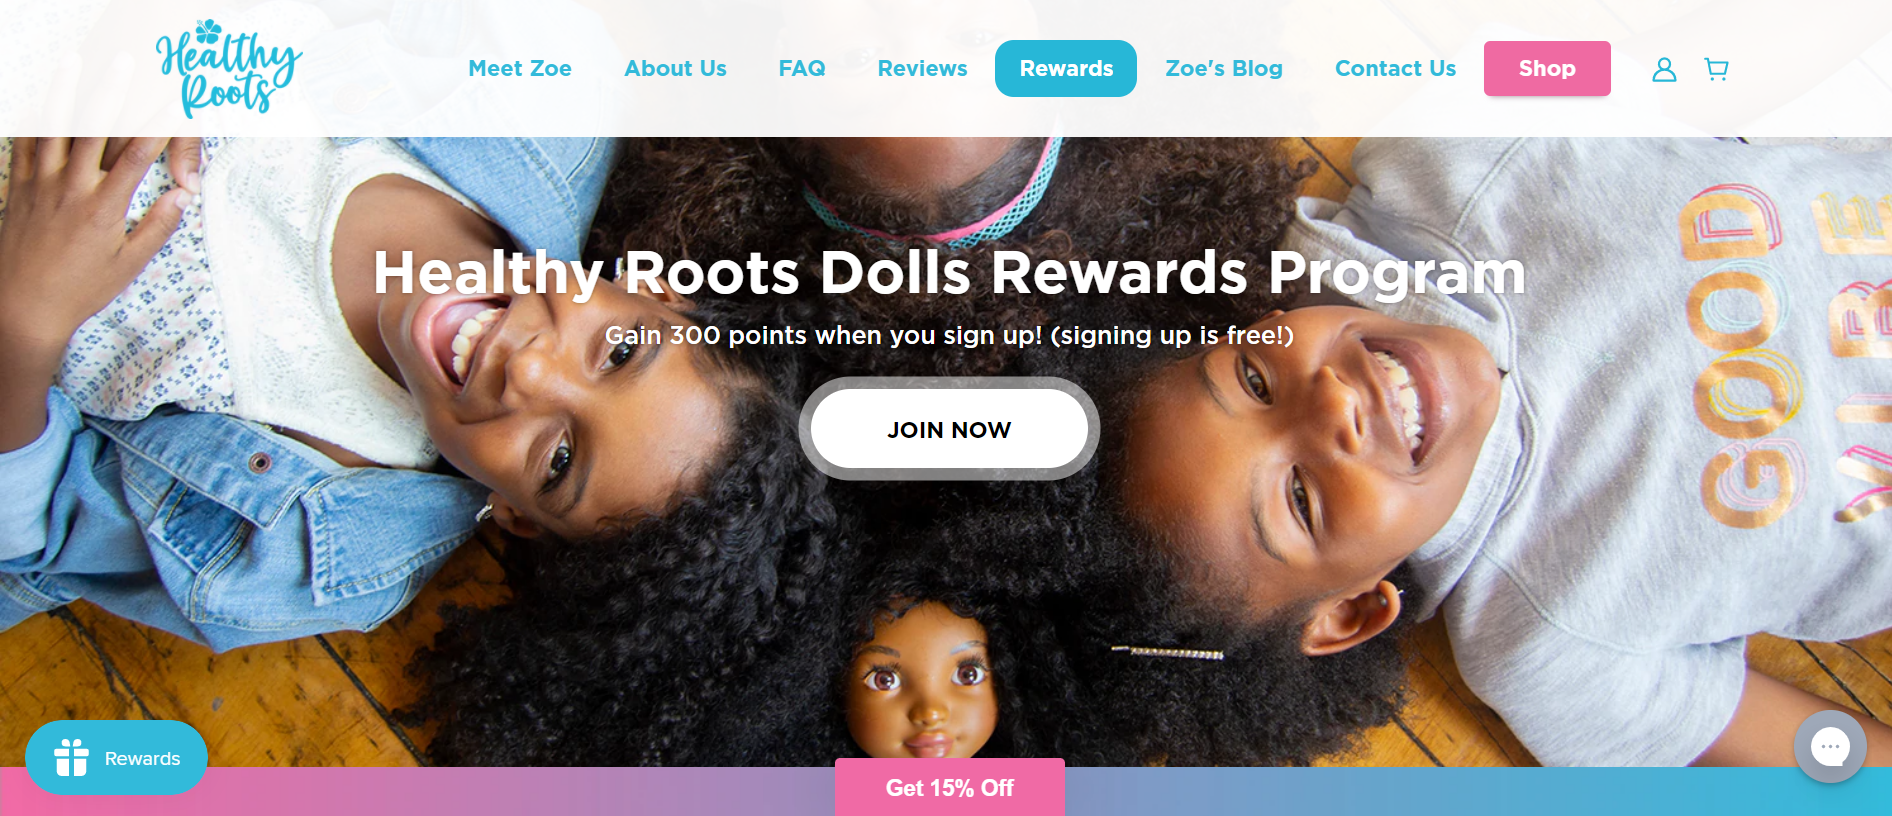 Healthy Roots Dolls Rewards program